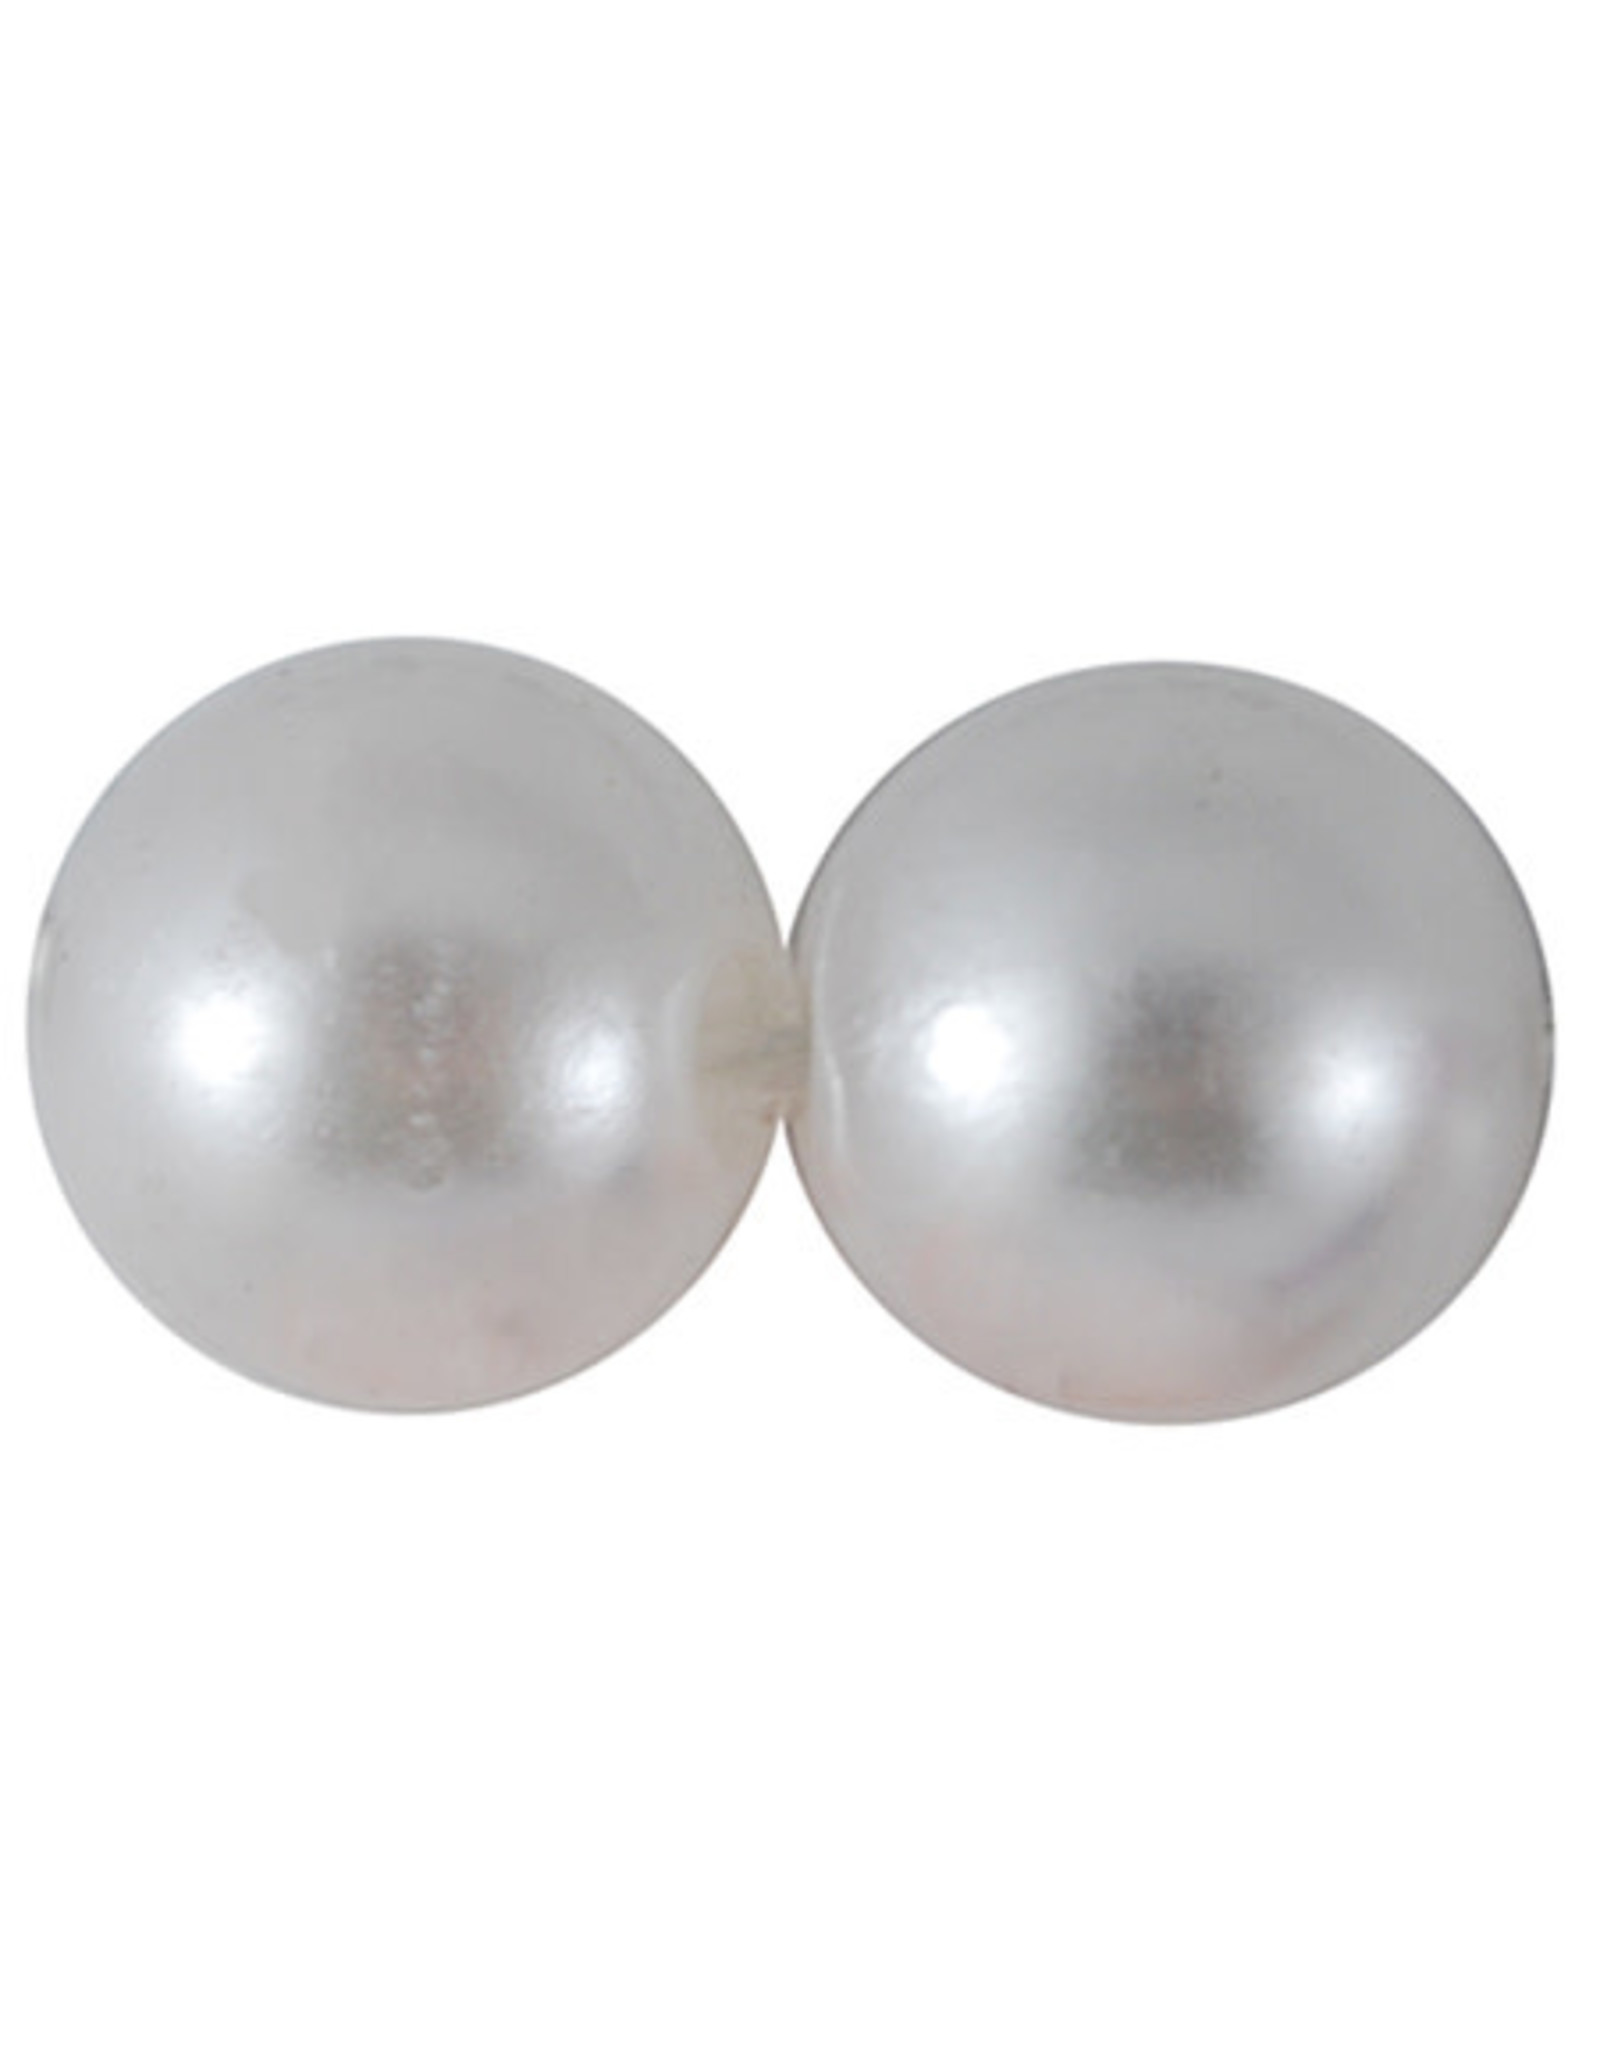 Craft Pearls  20mm White  x10